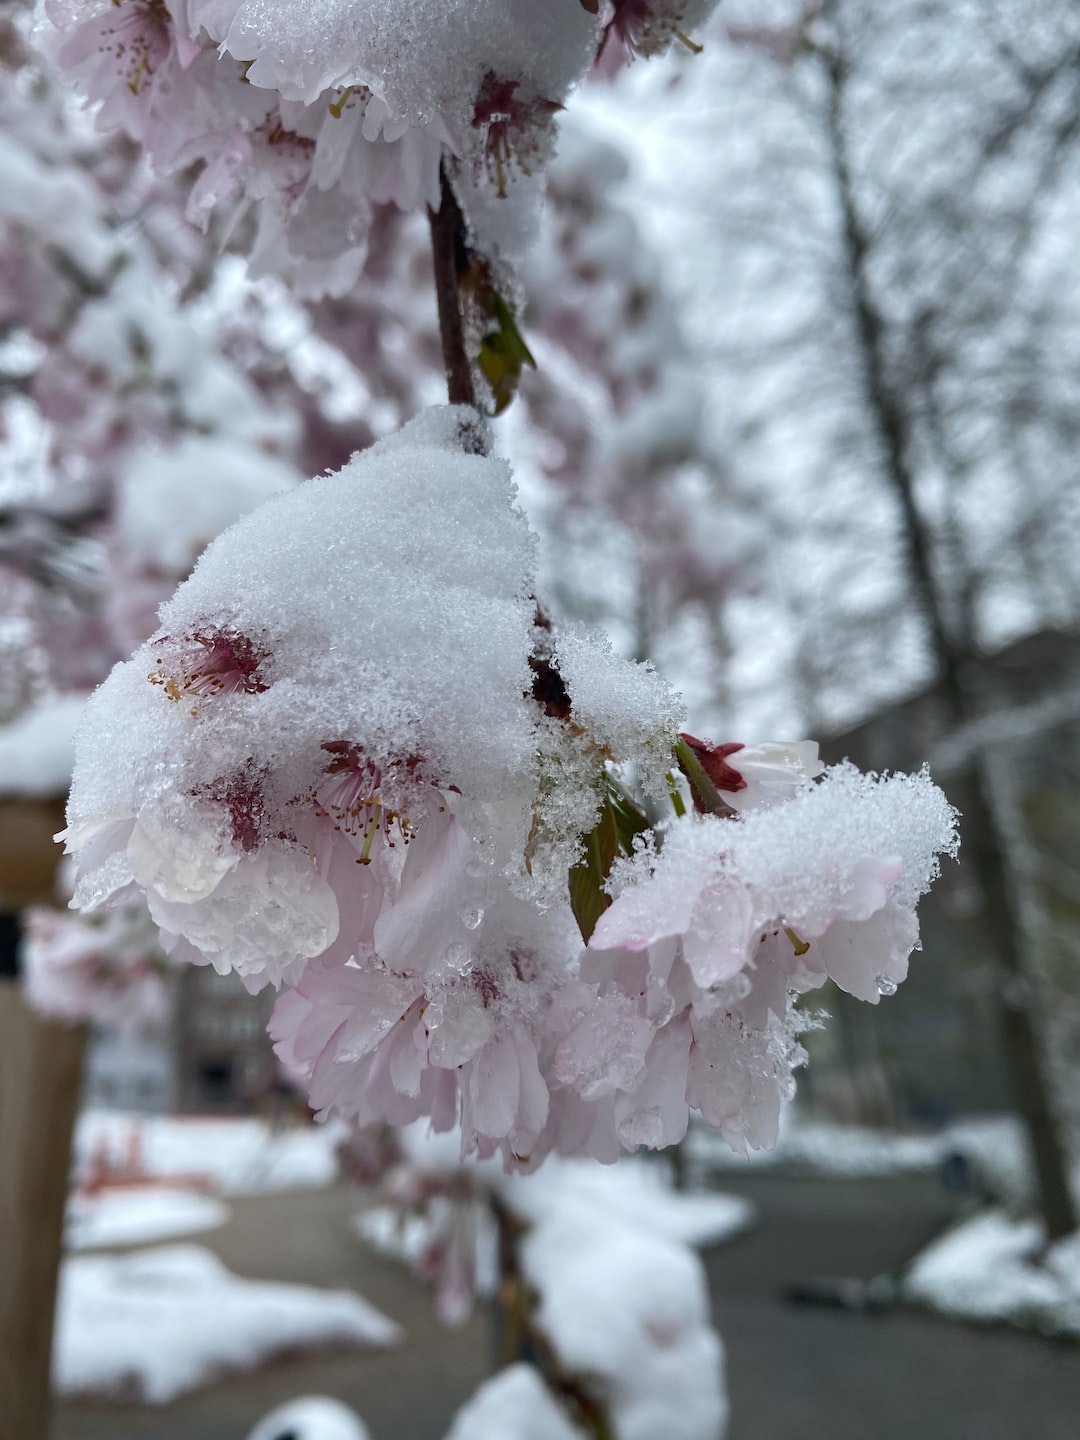 Snow n cherry blossom!